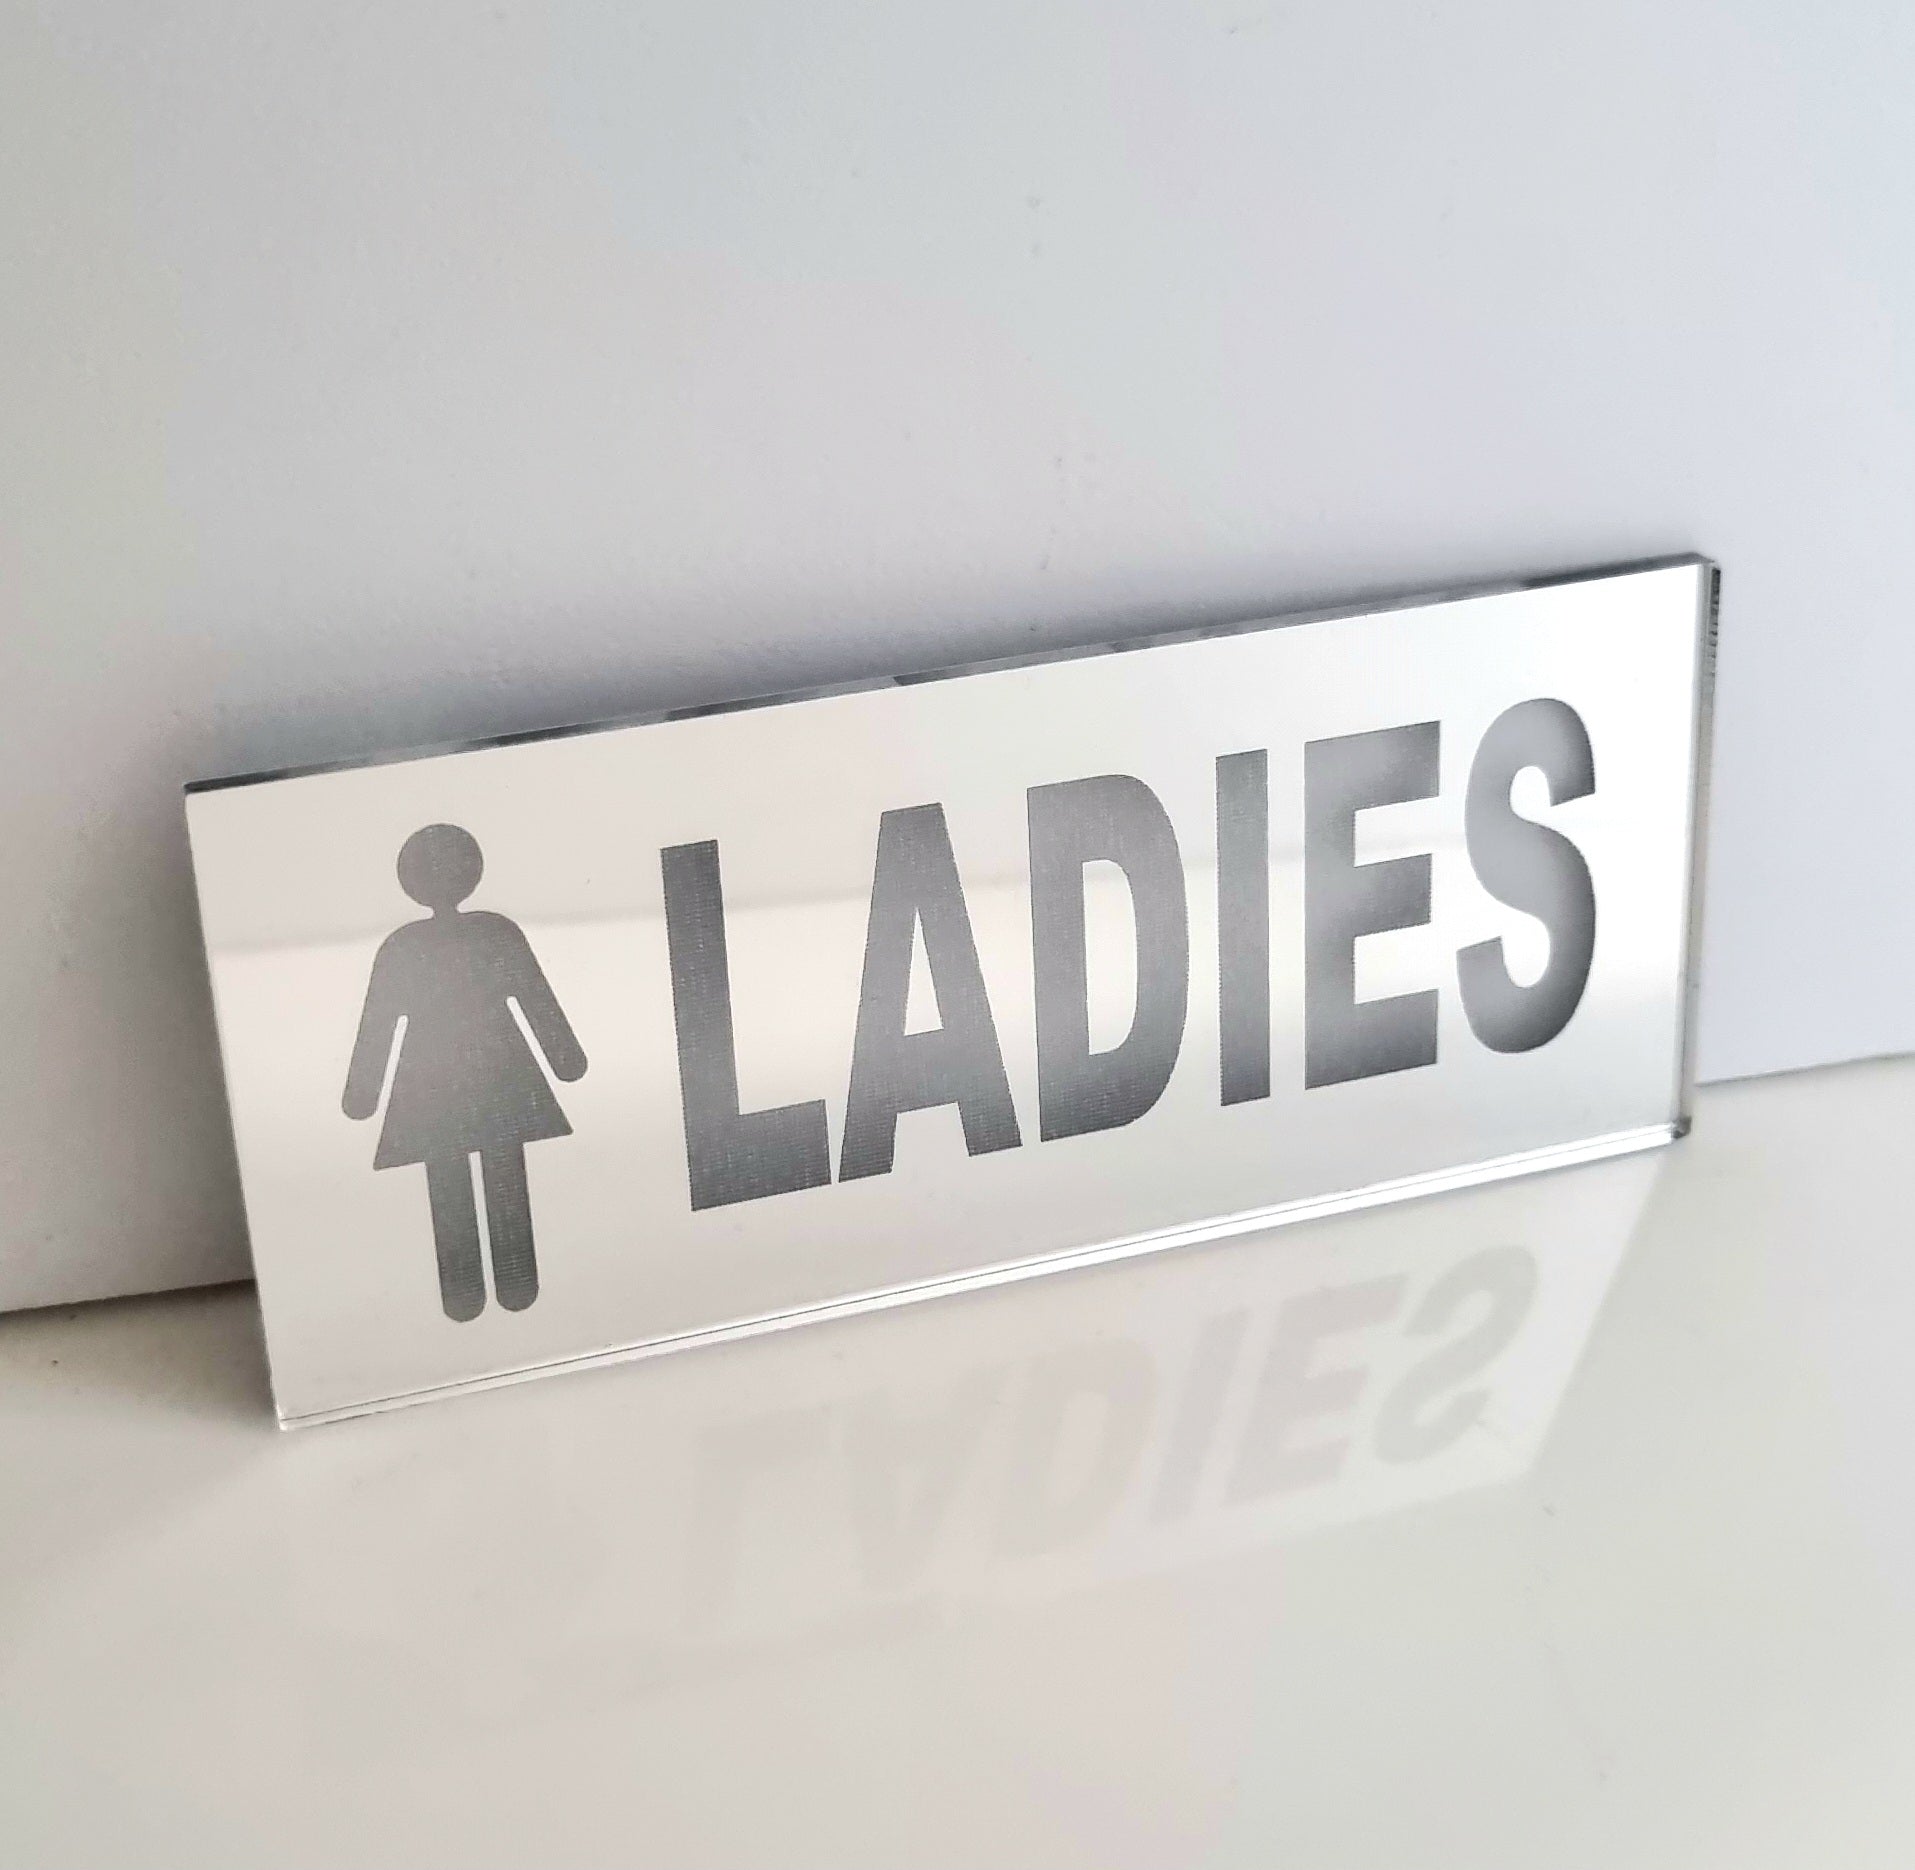 Ladies Toilet Mirrored Sign